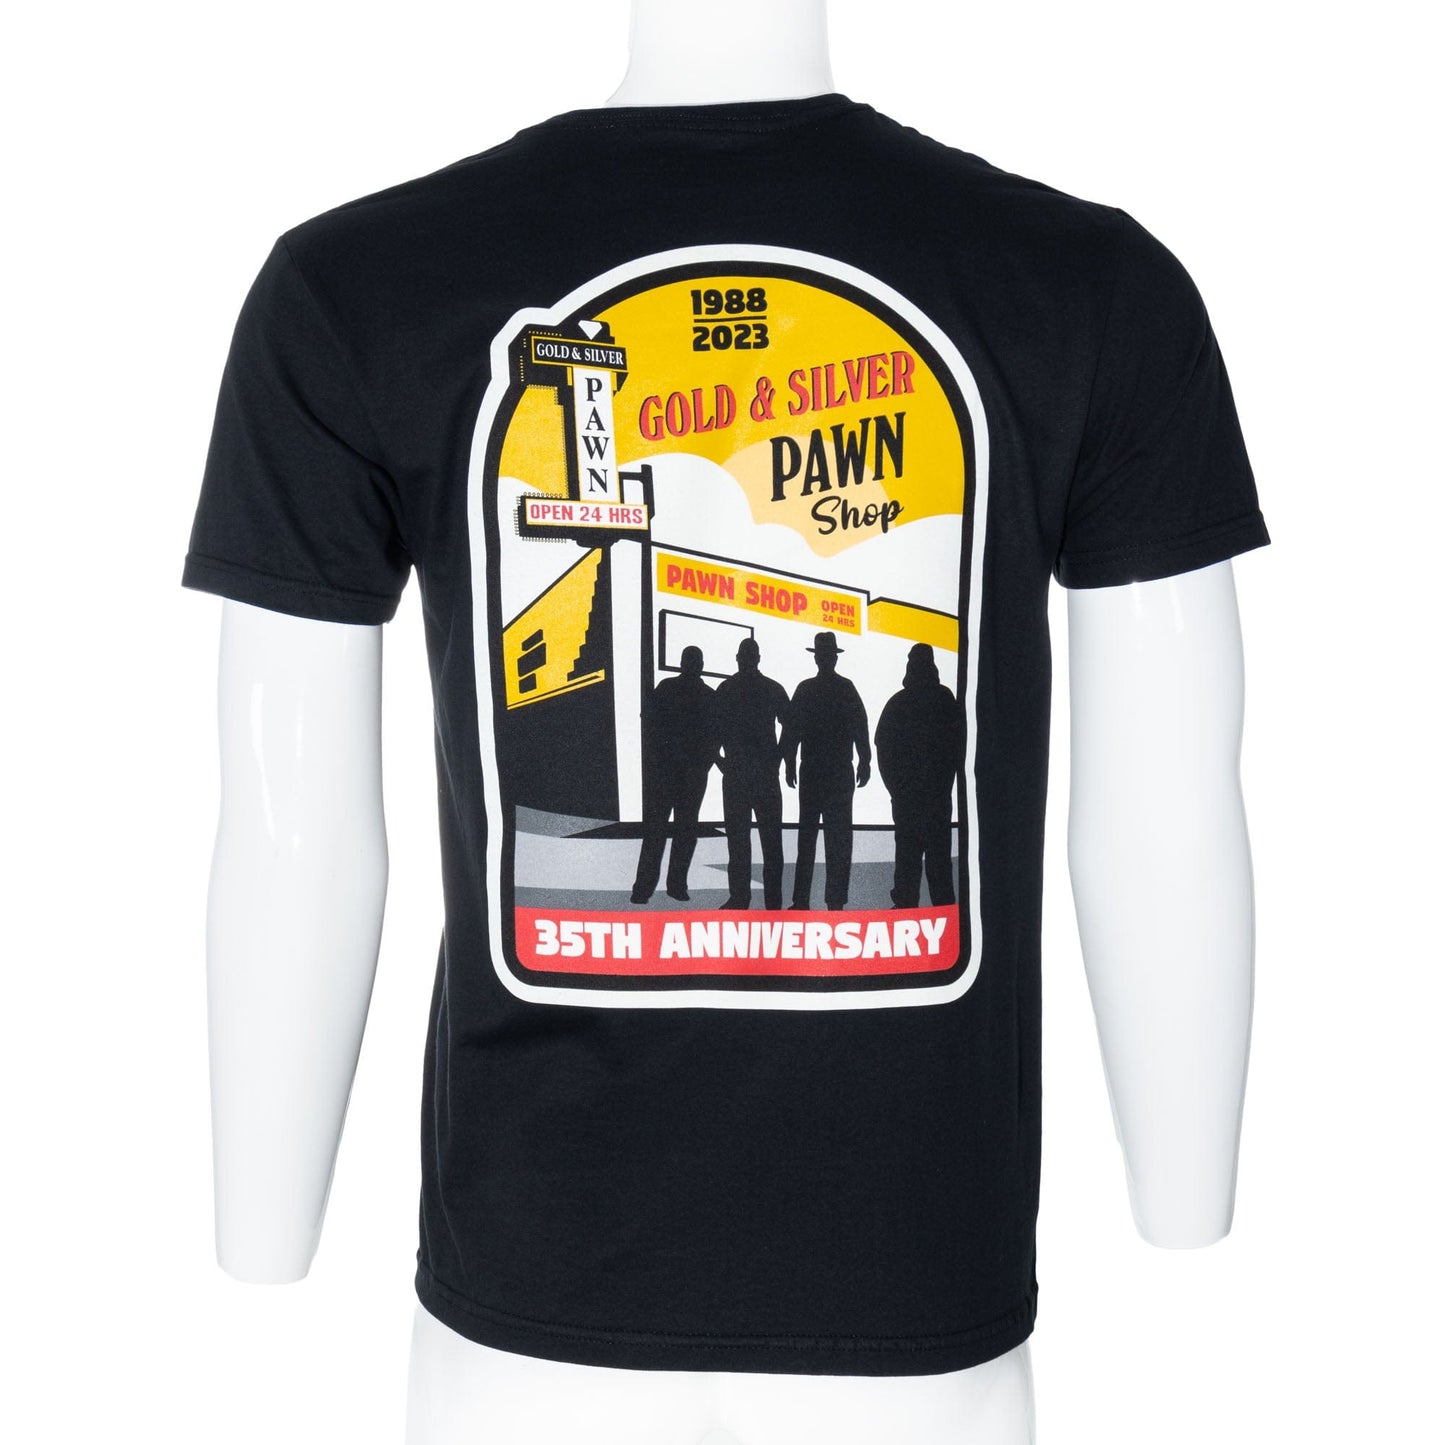 Gold & Silver Pawn Shop 35th Anniversary T-Shirts Black